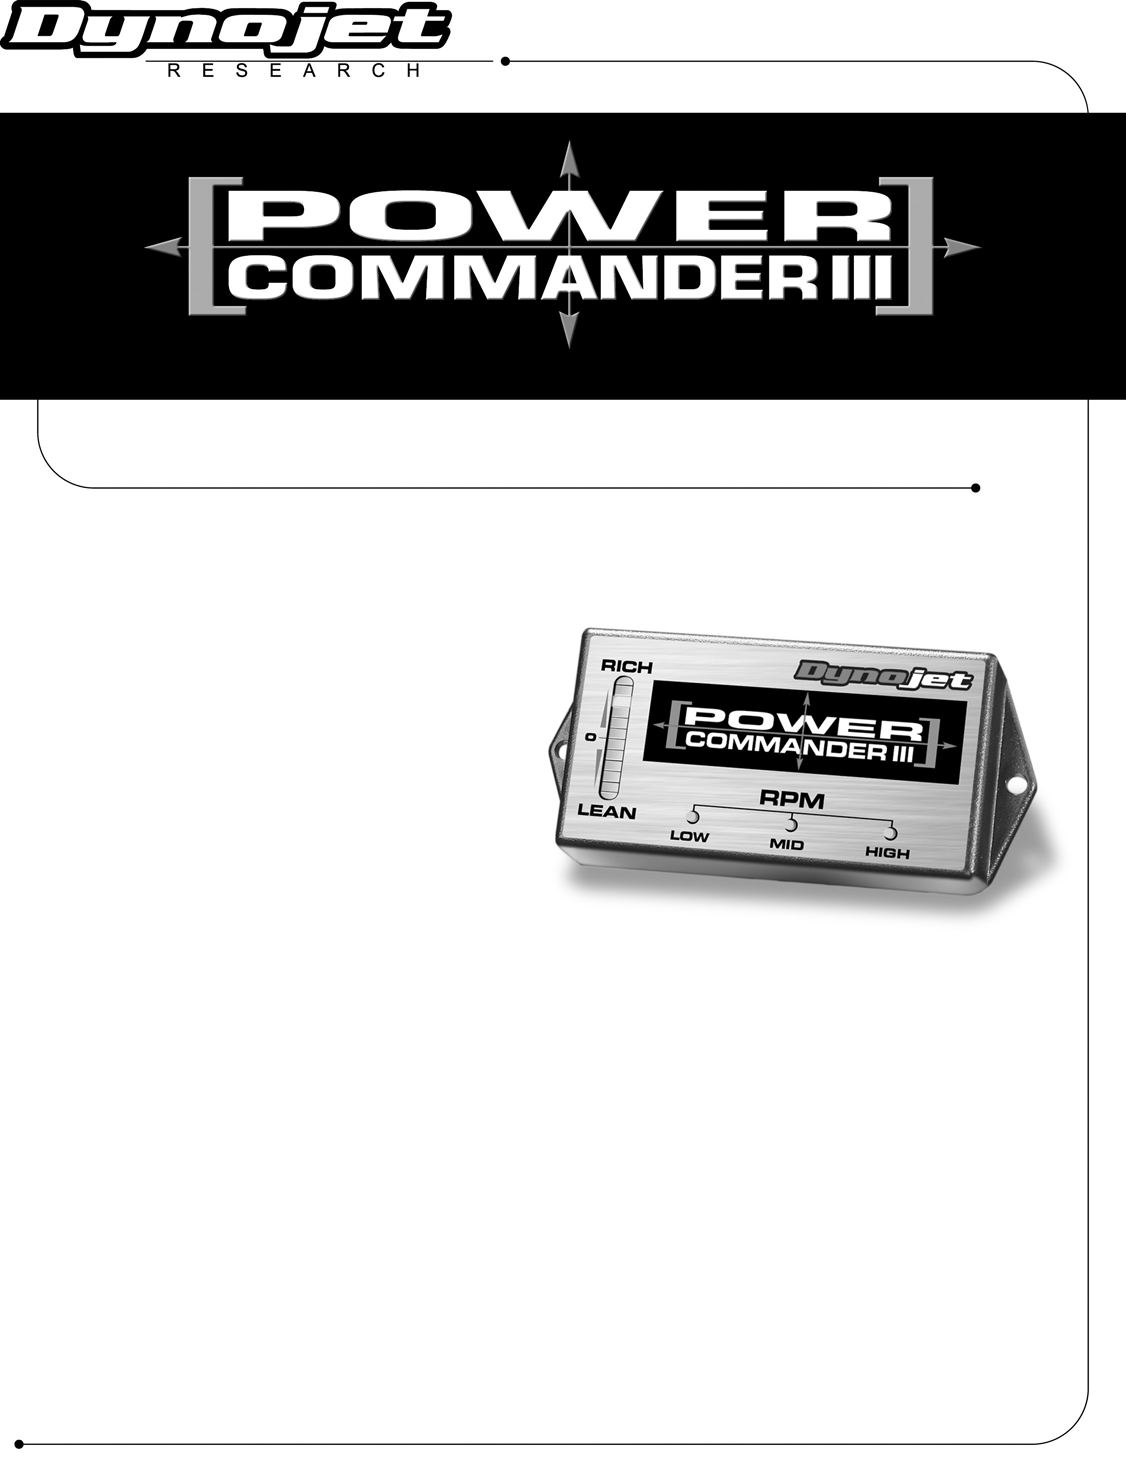 2002-2003 Yamaha TDM900 Parts List 1 Power Commander 1 CD-ROM 1 Installationsanleitung 1 Poweradapter 2 Power Commander Aufkleber 2 Dynojet Aufkleber 1 Klettbandstreifen 1 Reinigungstuch